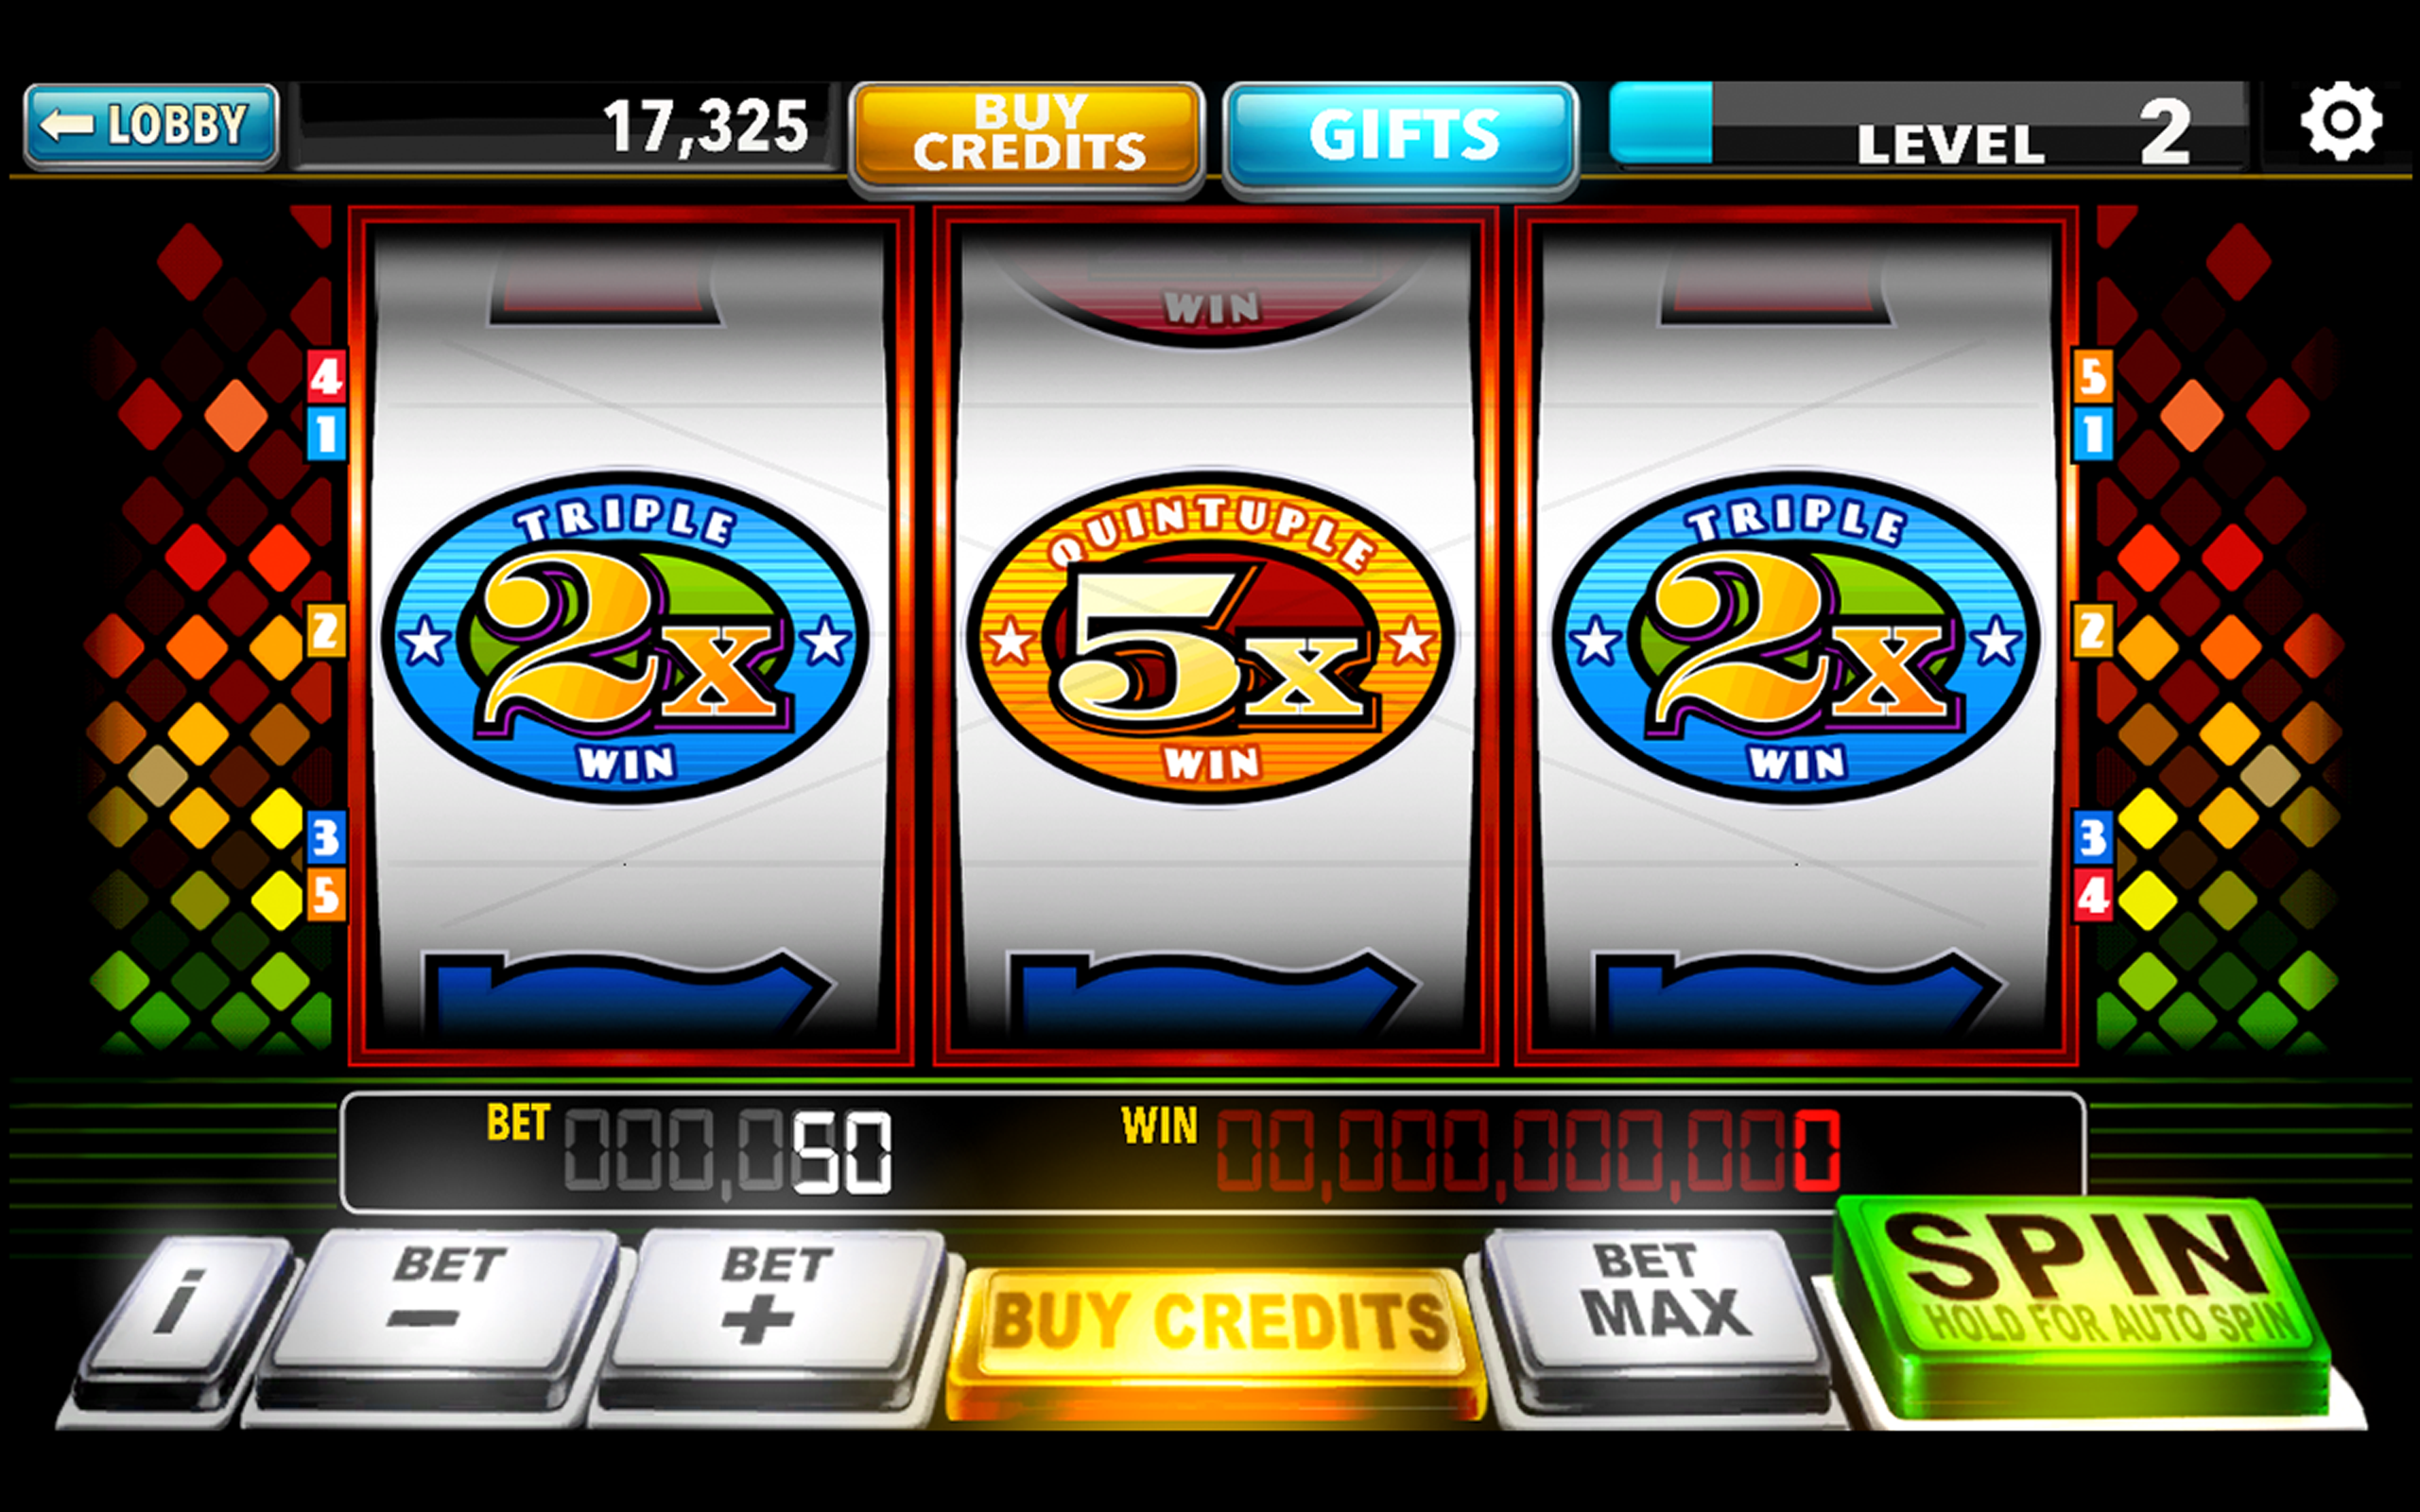 Juegos Joreels com free slot machine bonus rounds - 16692